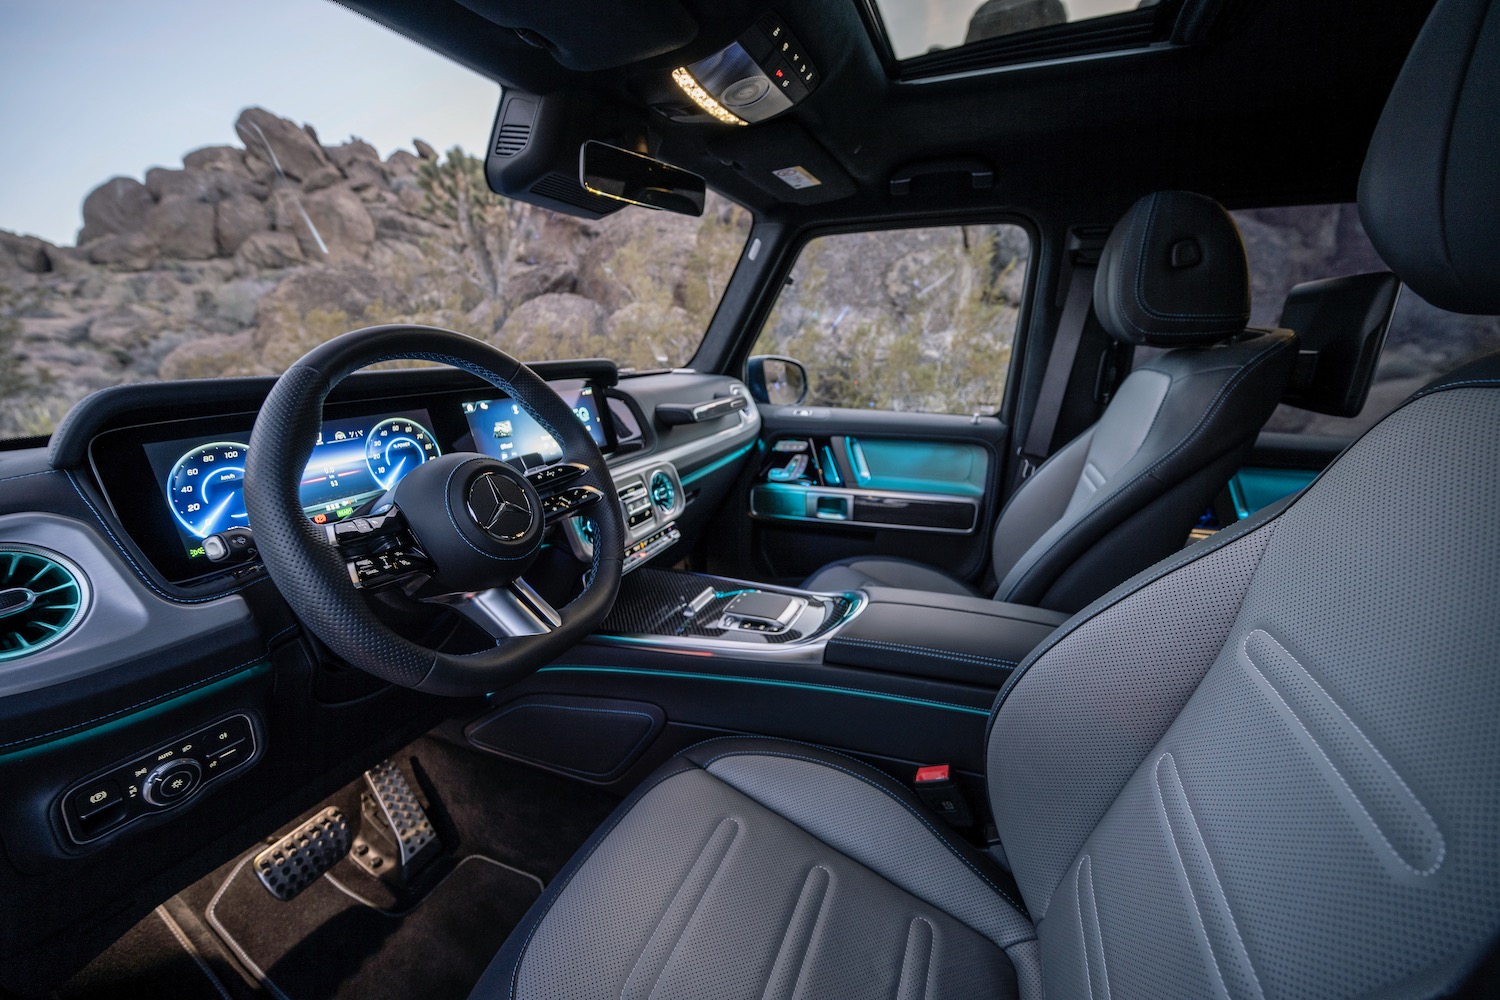 Mercedes-Benz G580 with EQ Technology interior.